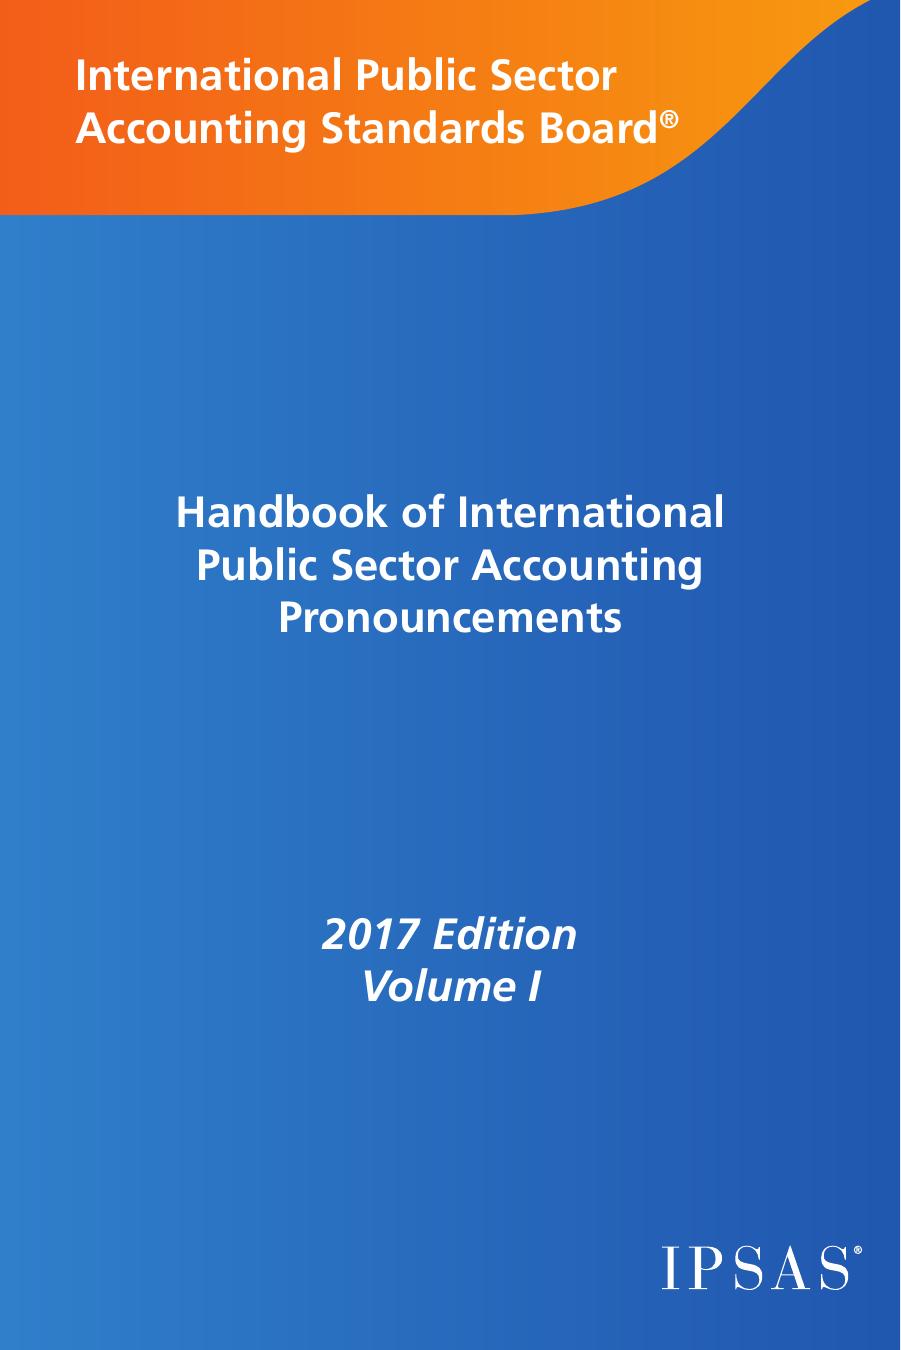 Handbook of International Public Sector Accounting Pronouncements VOL 1 2017